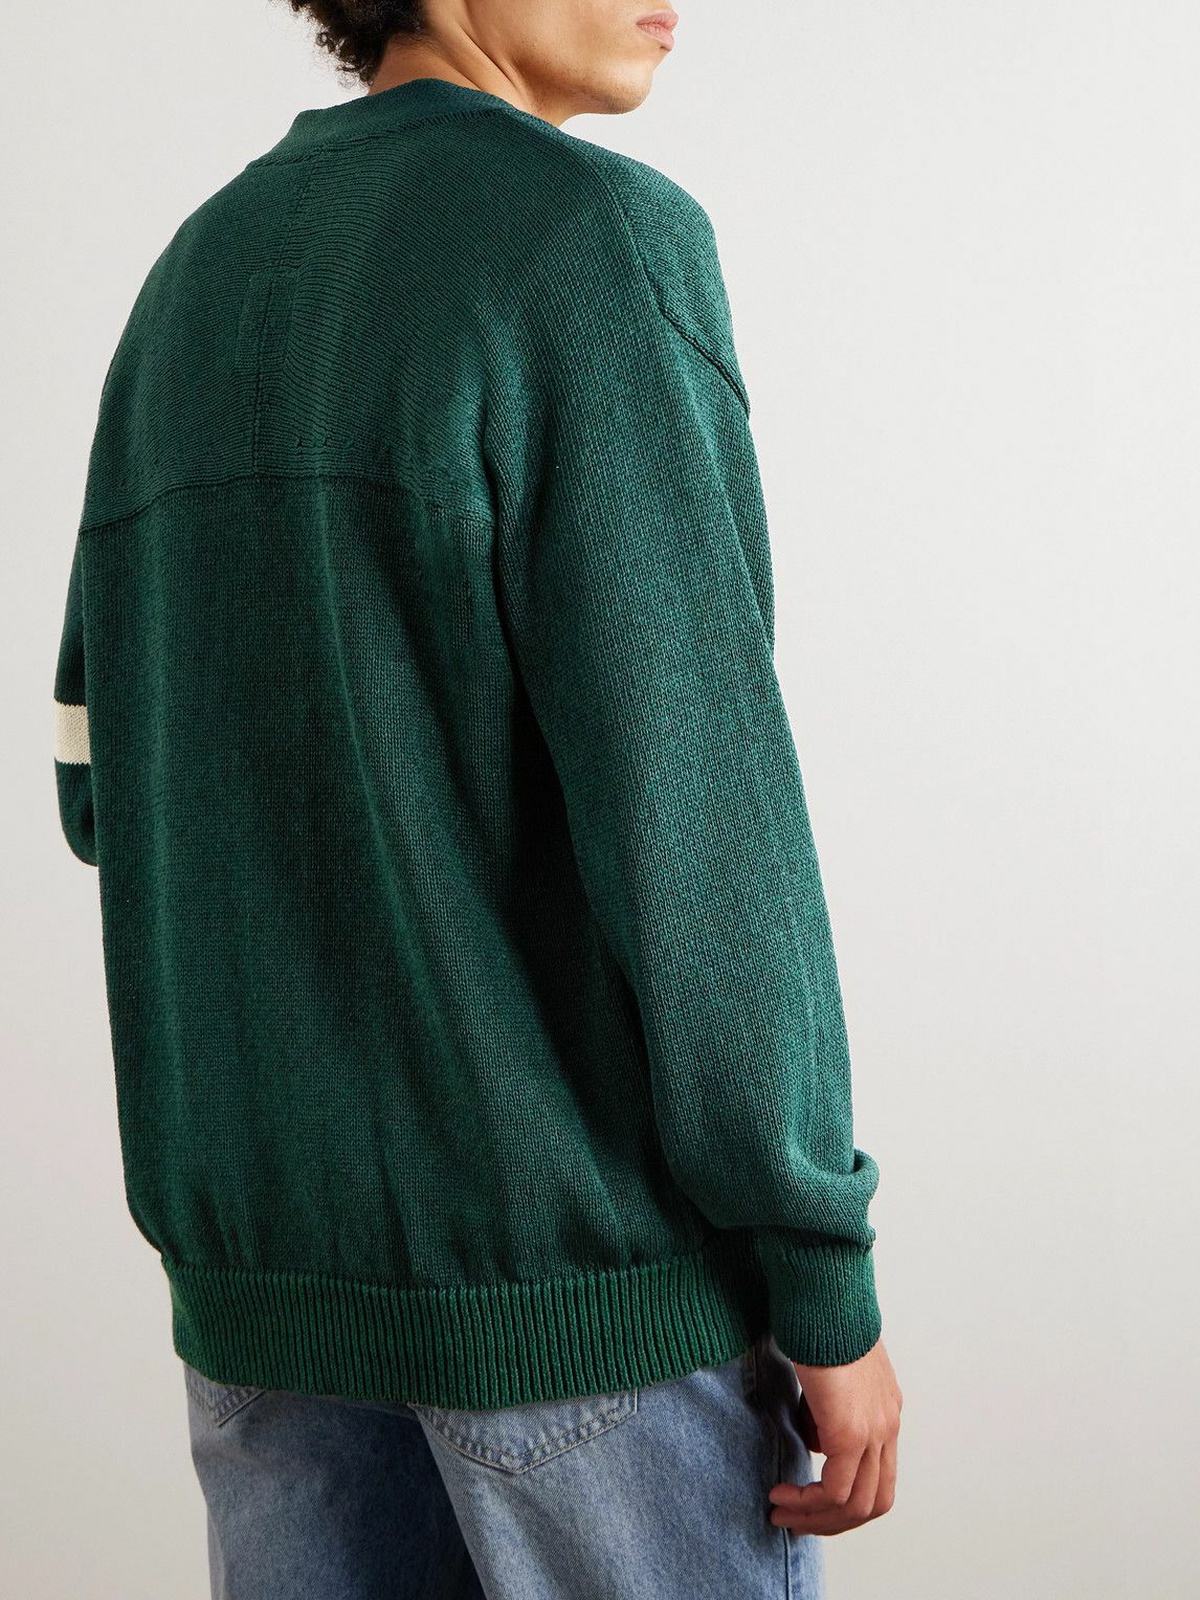 nanamica - Striped Knitted Cardigan - Green Nanamica